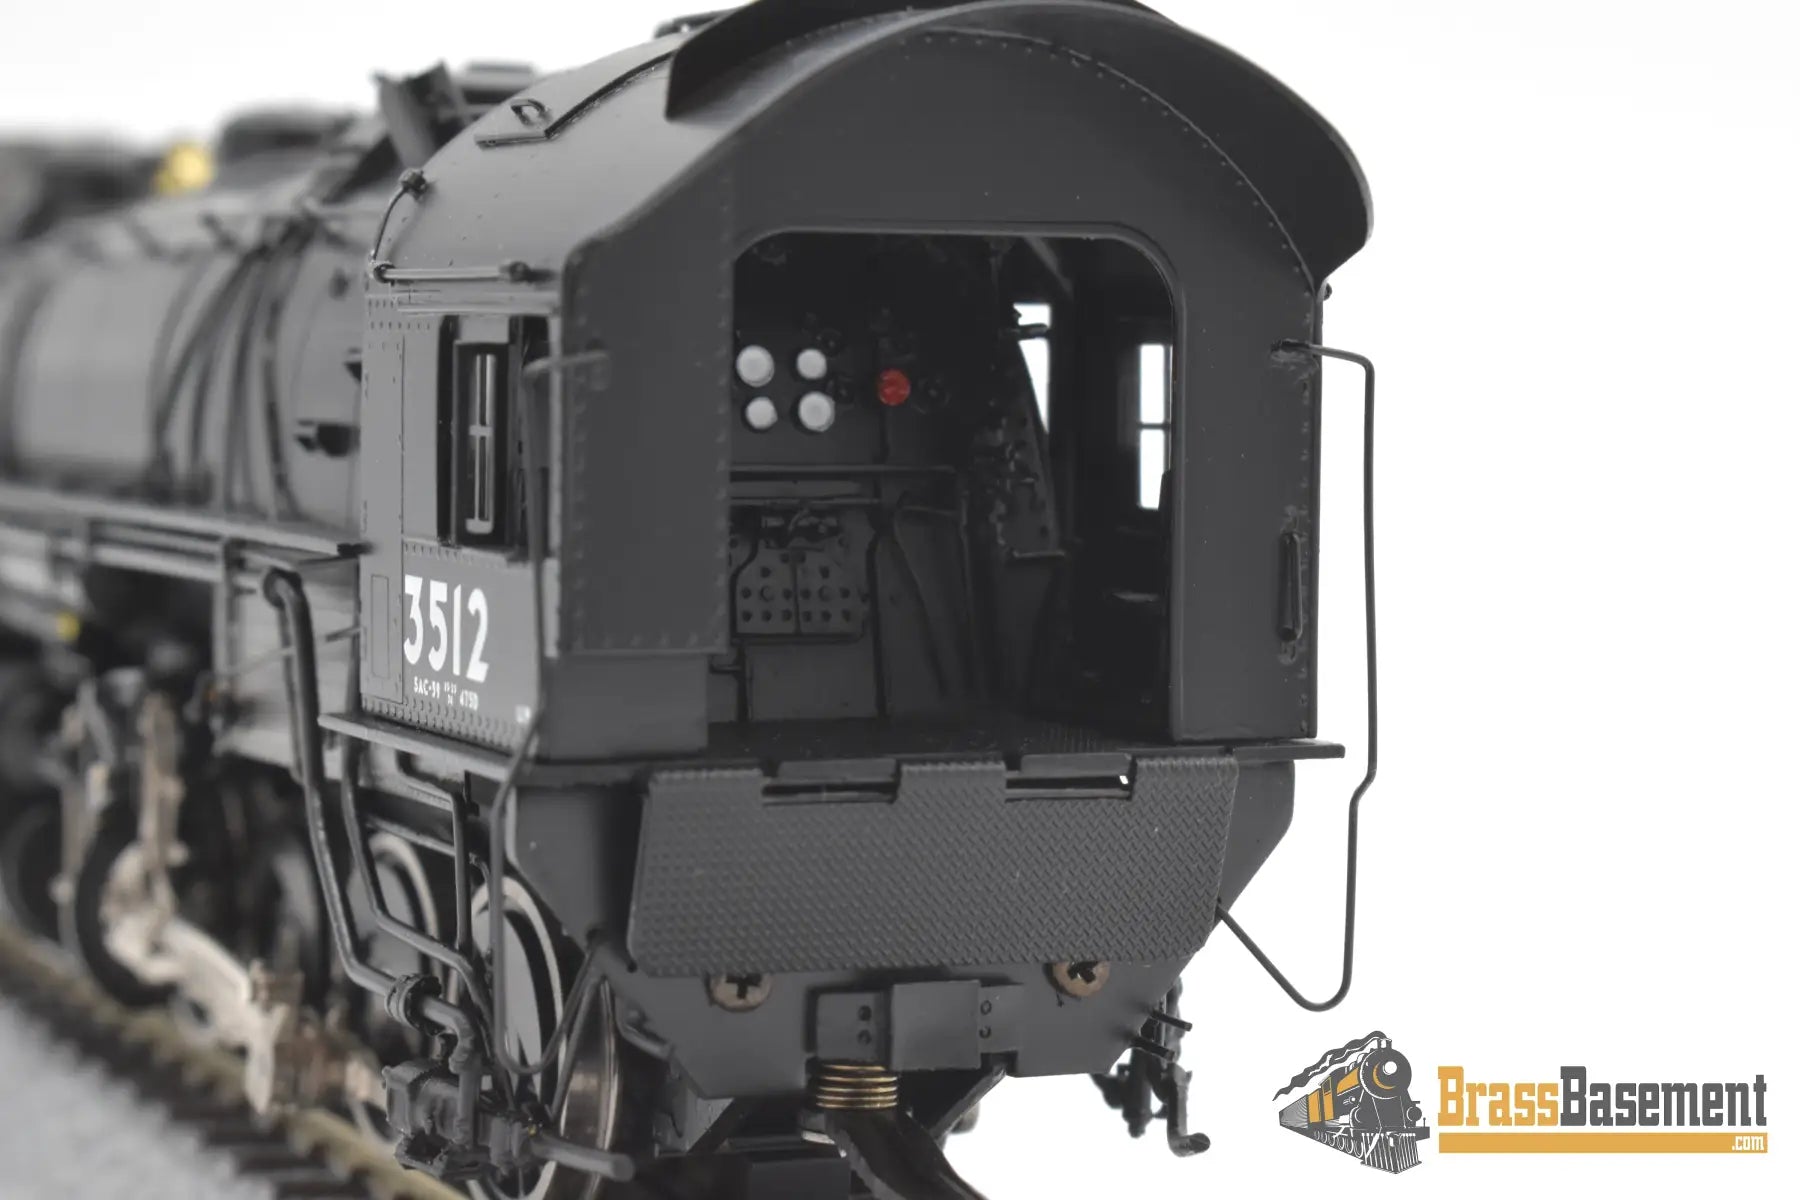 Ho Brass - Omi 4540.1 Union Pacific 2 - 8 - 8 - 0 #3512 ‘Bull Moose’ Mint Steam